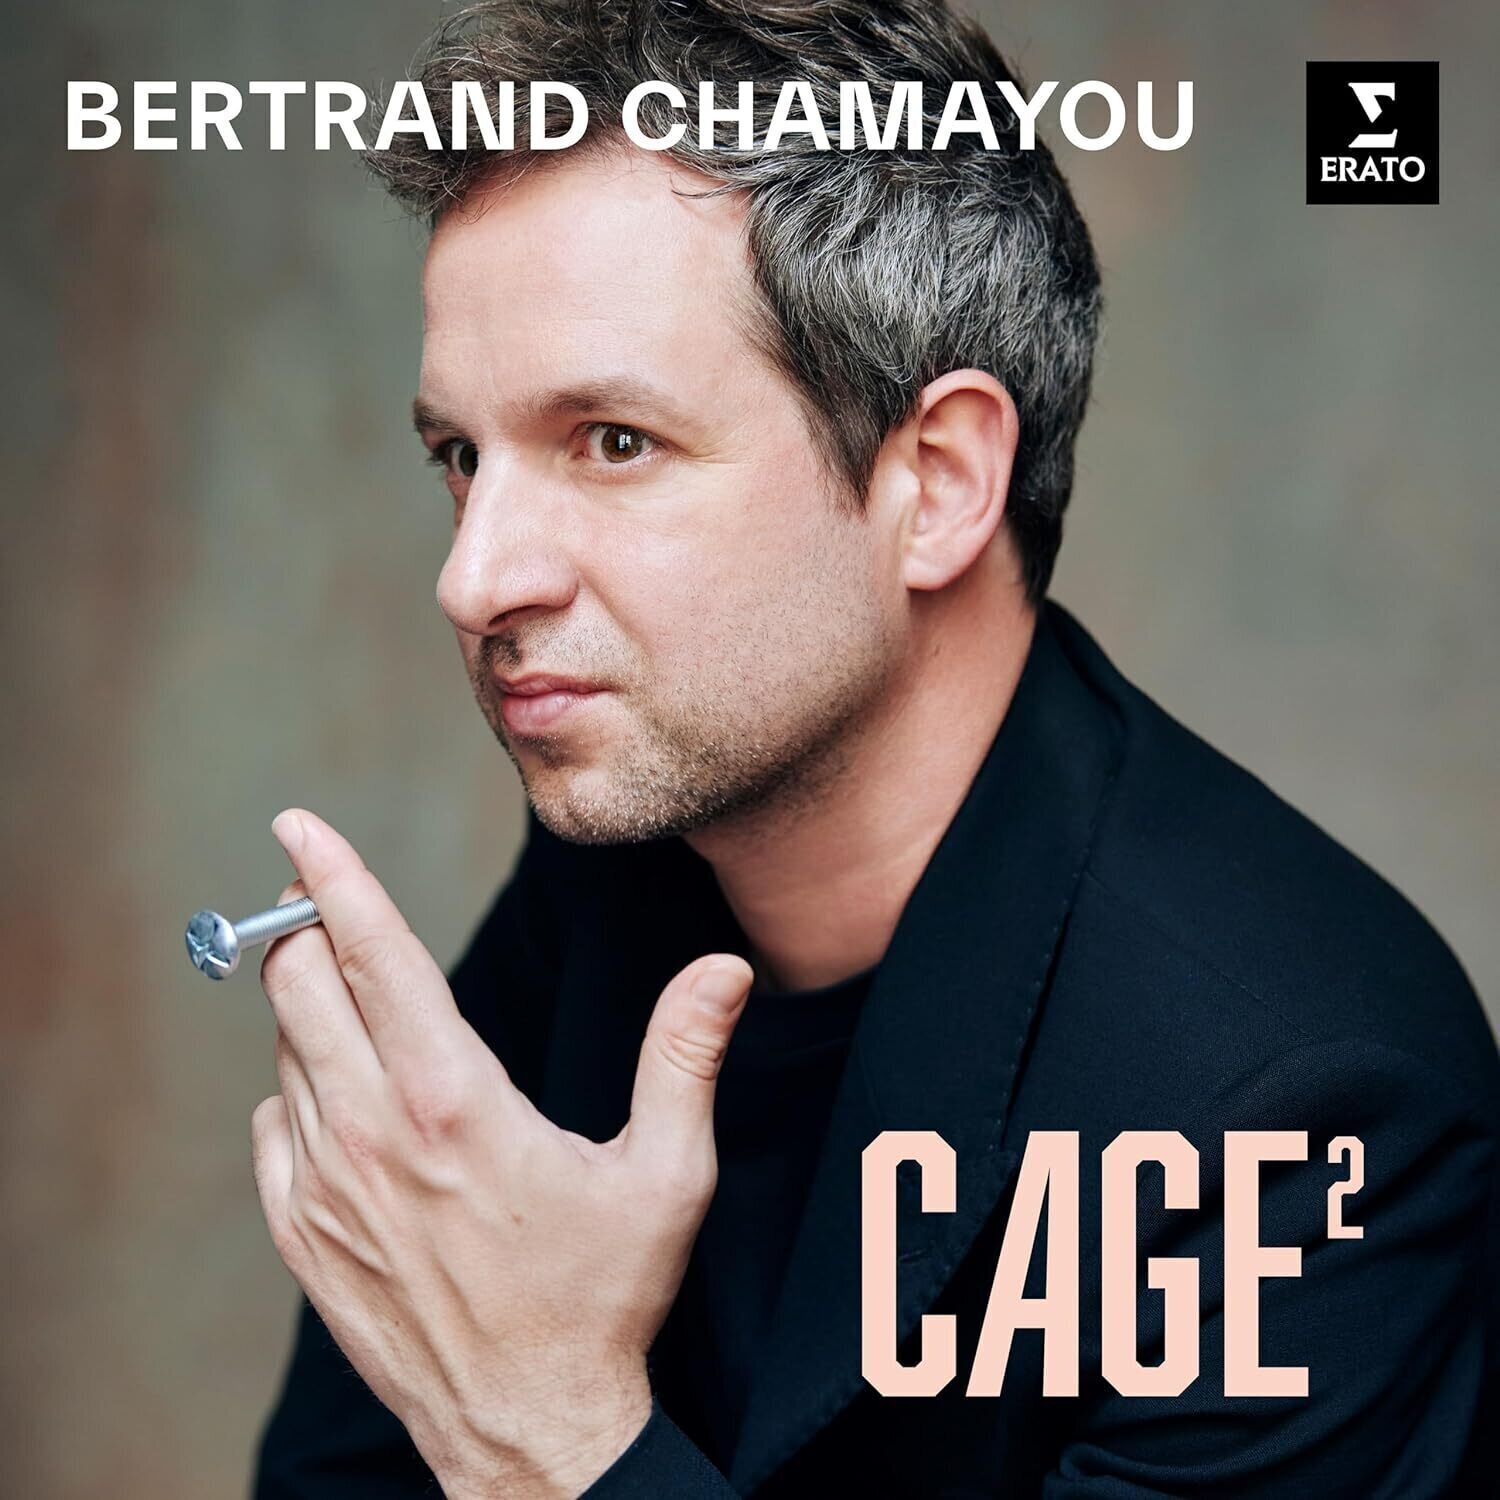 Glasbene CD Bertrand Chamayou - Cage2 (CD)